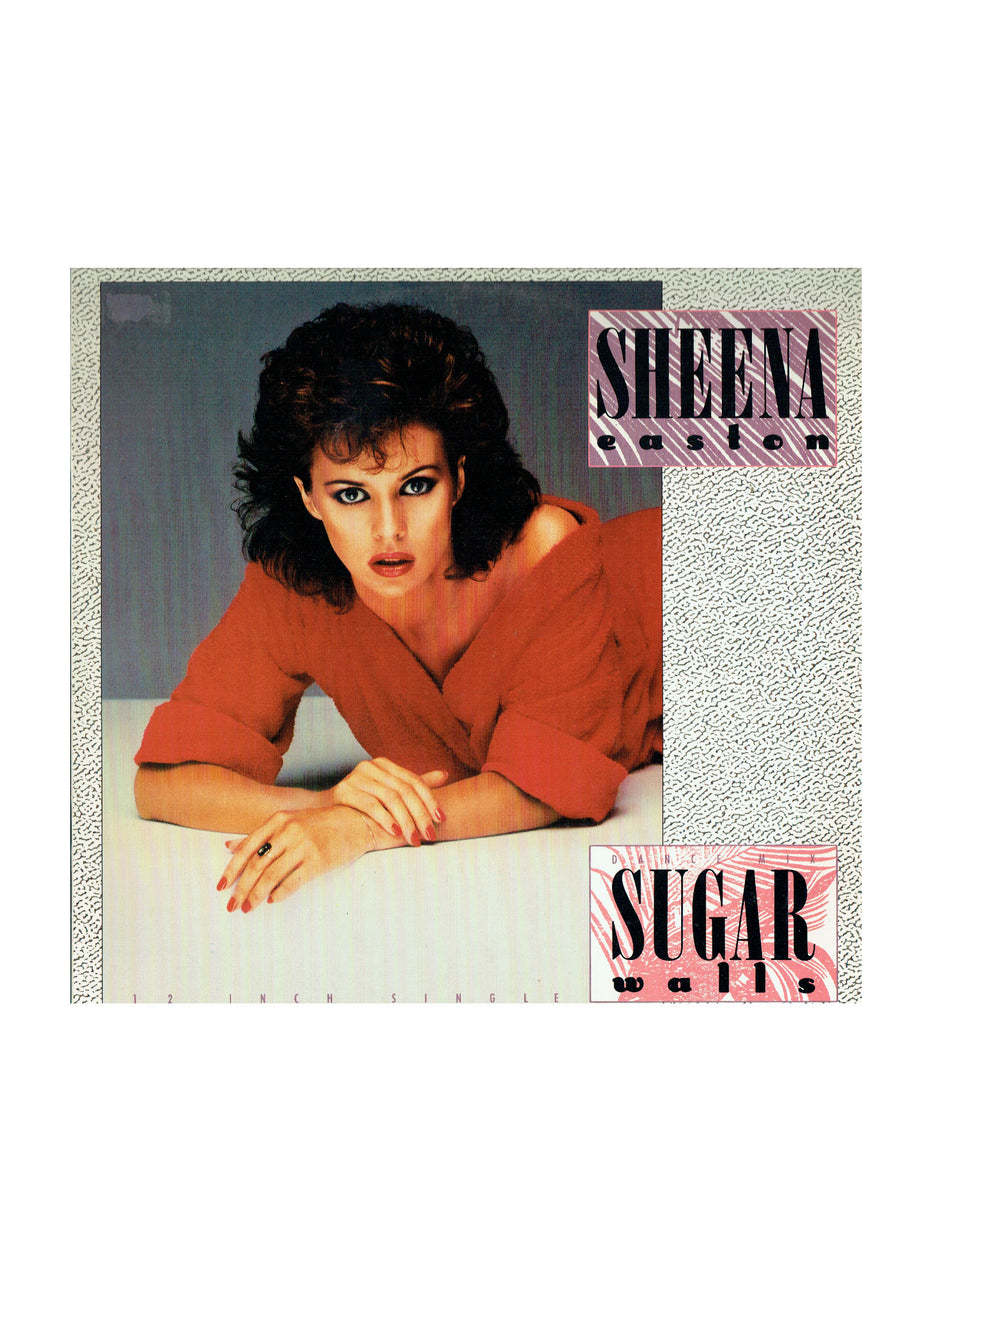 Prince – Sheena Easton Sugar Walls (Remix) 12 Inch Vinyl Single EU Release Written By Prince AS